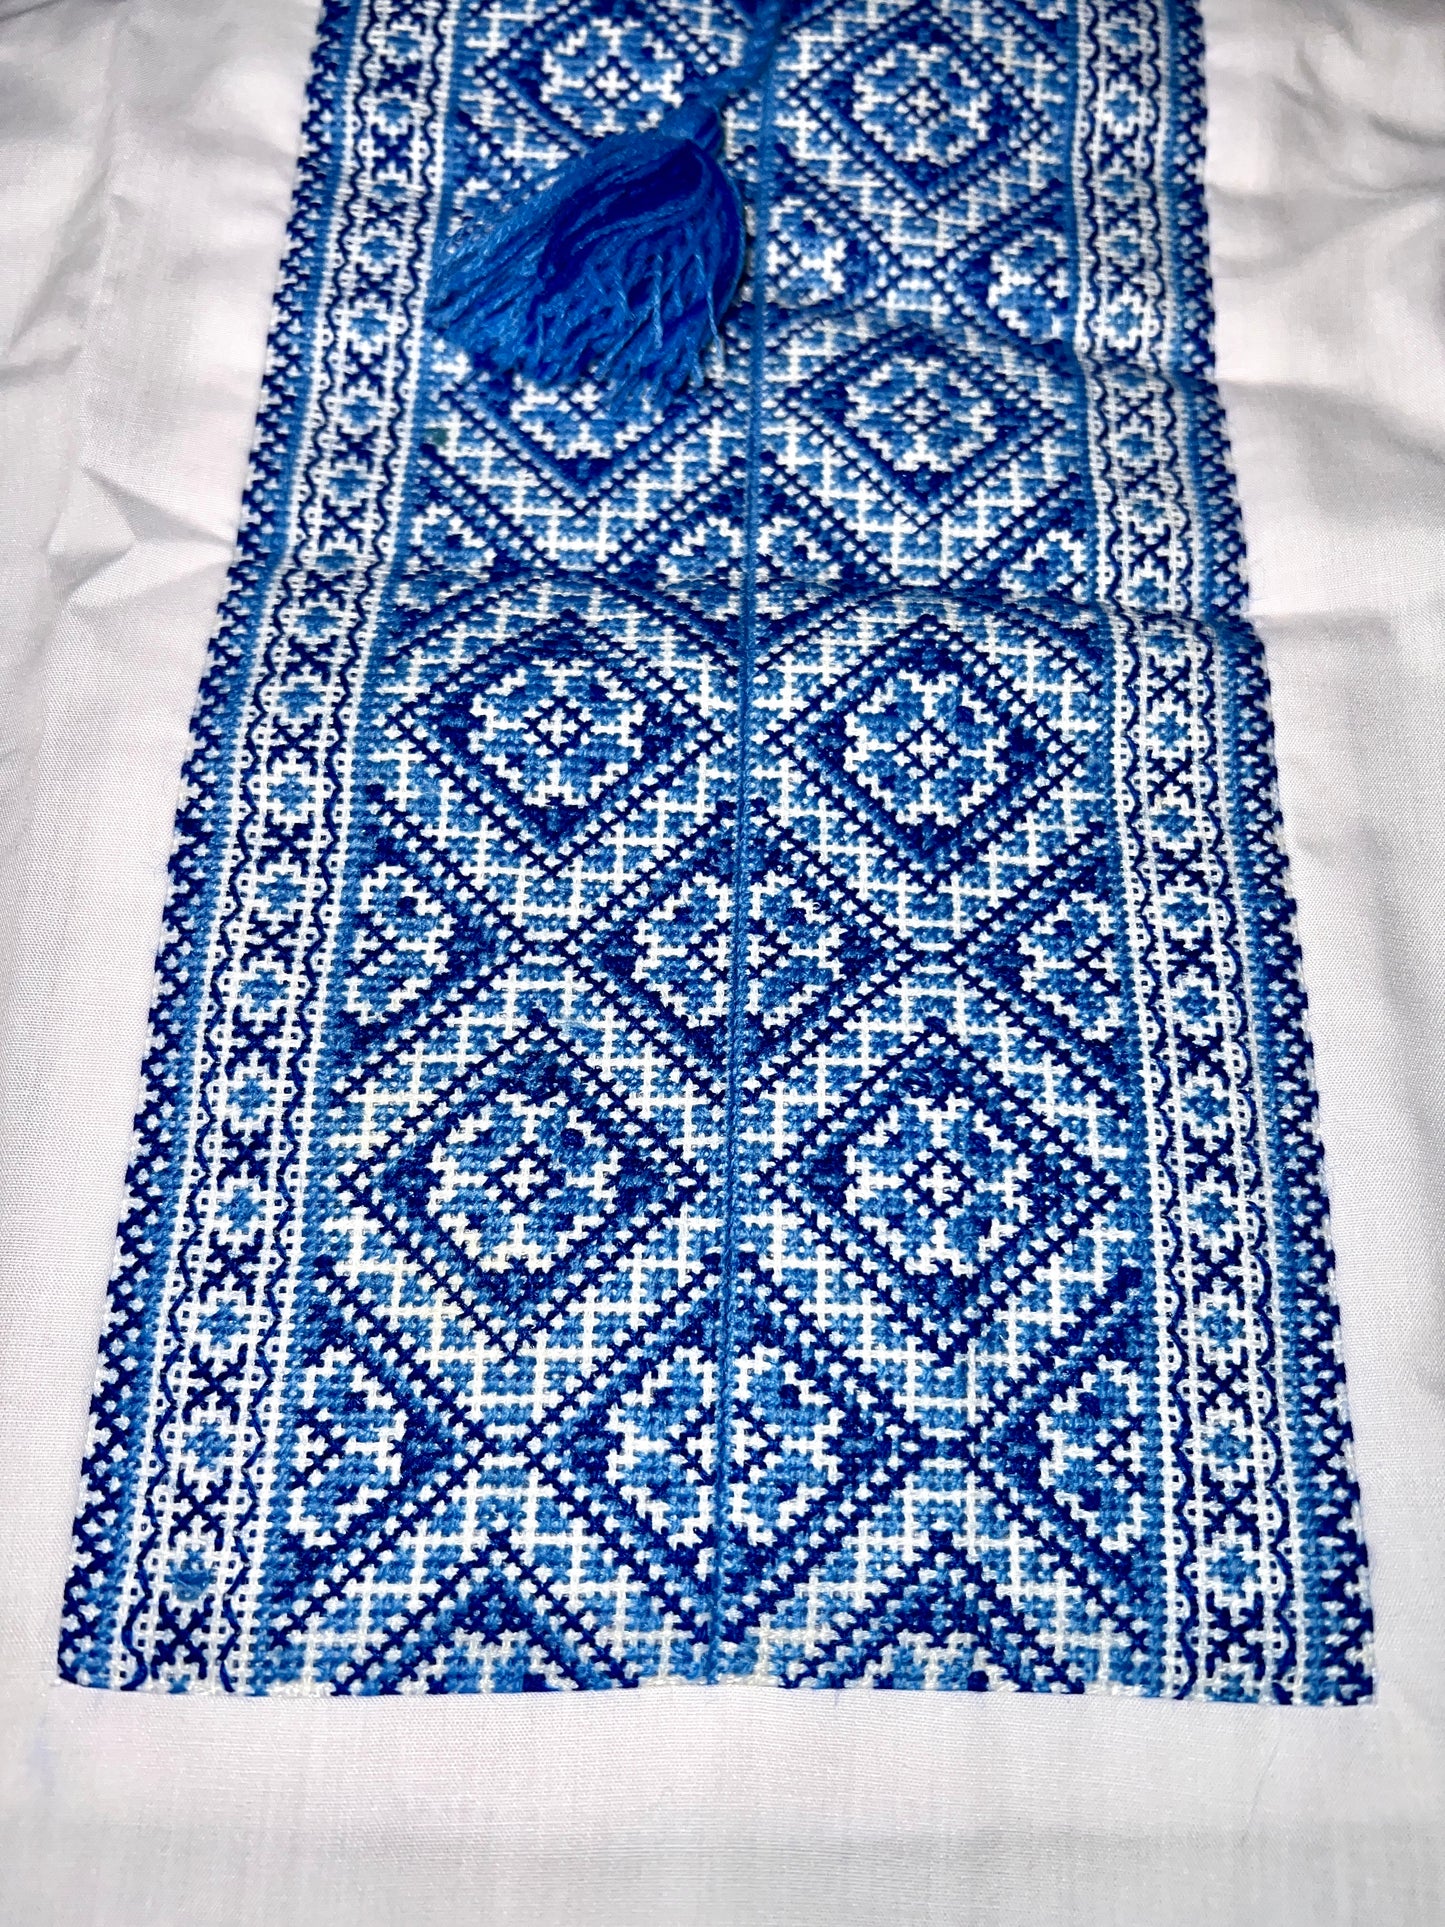 Ukrainian Handmade Embroidered Men's Shirt 124458